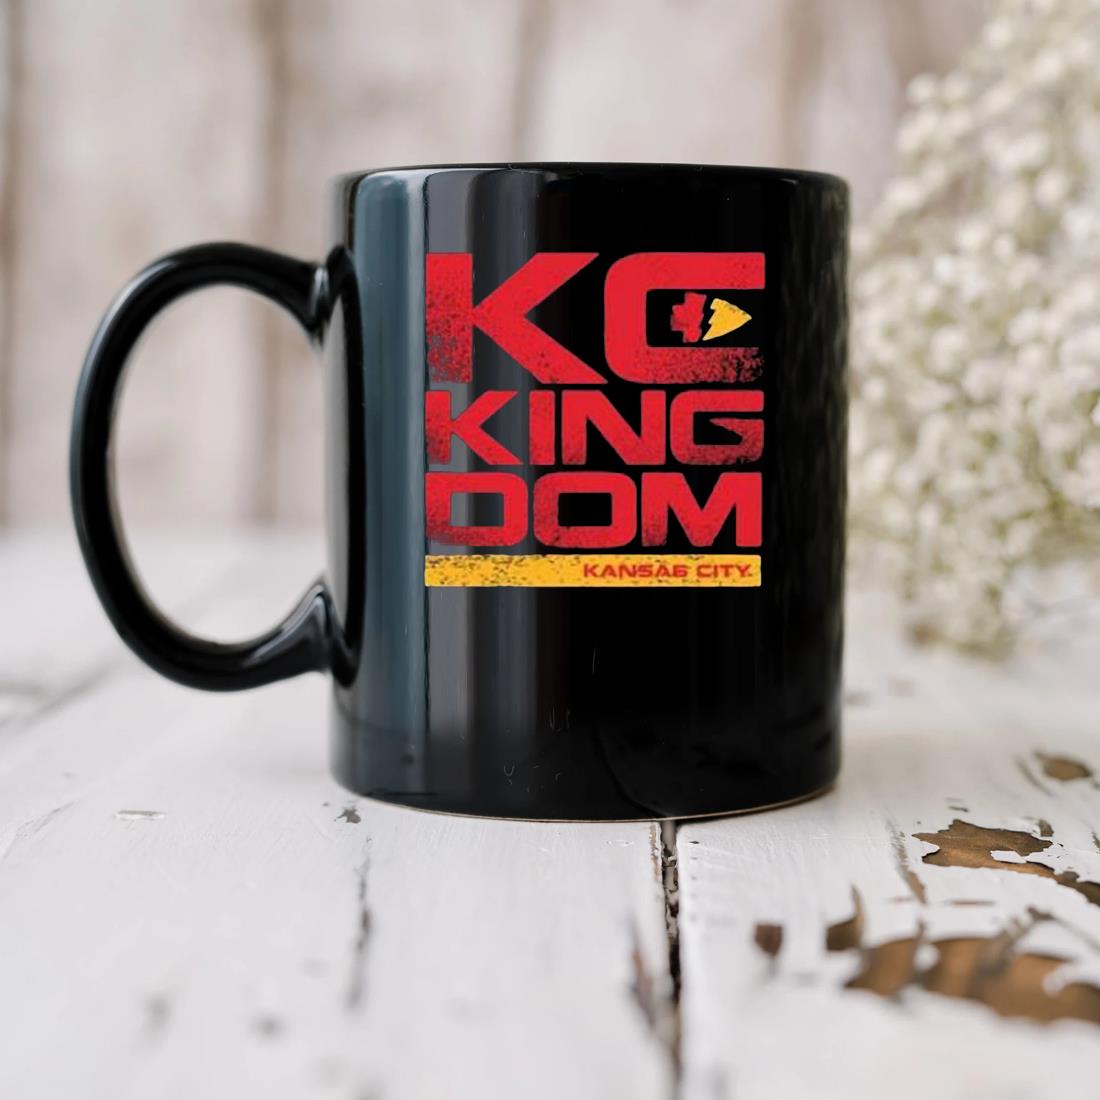 Kc Kingdom Chiefs Red Kingdom Kansas City Mug